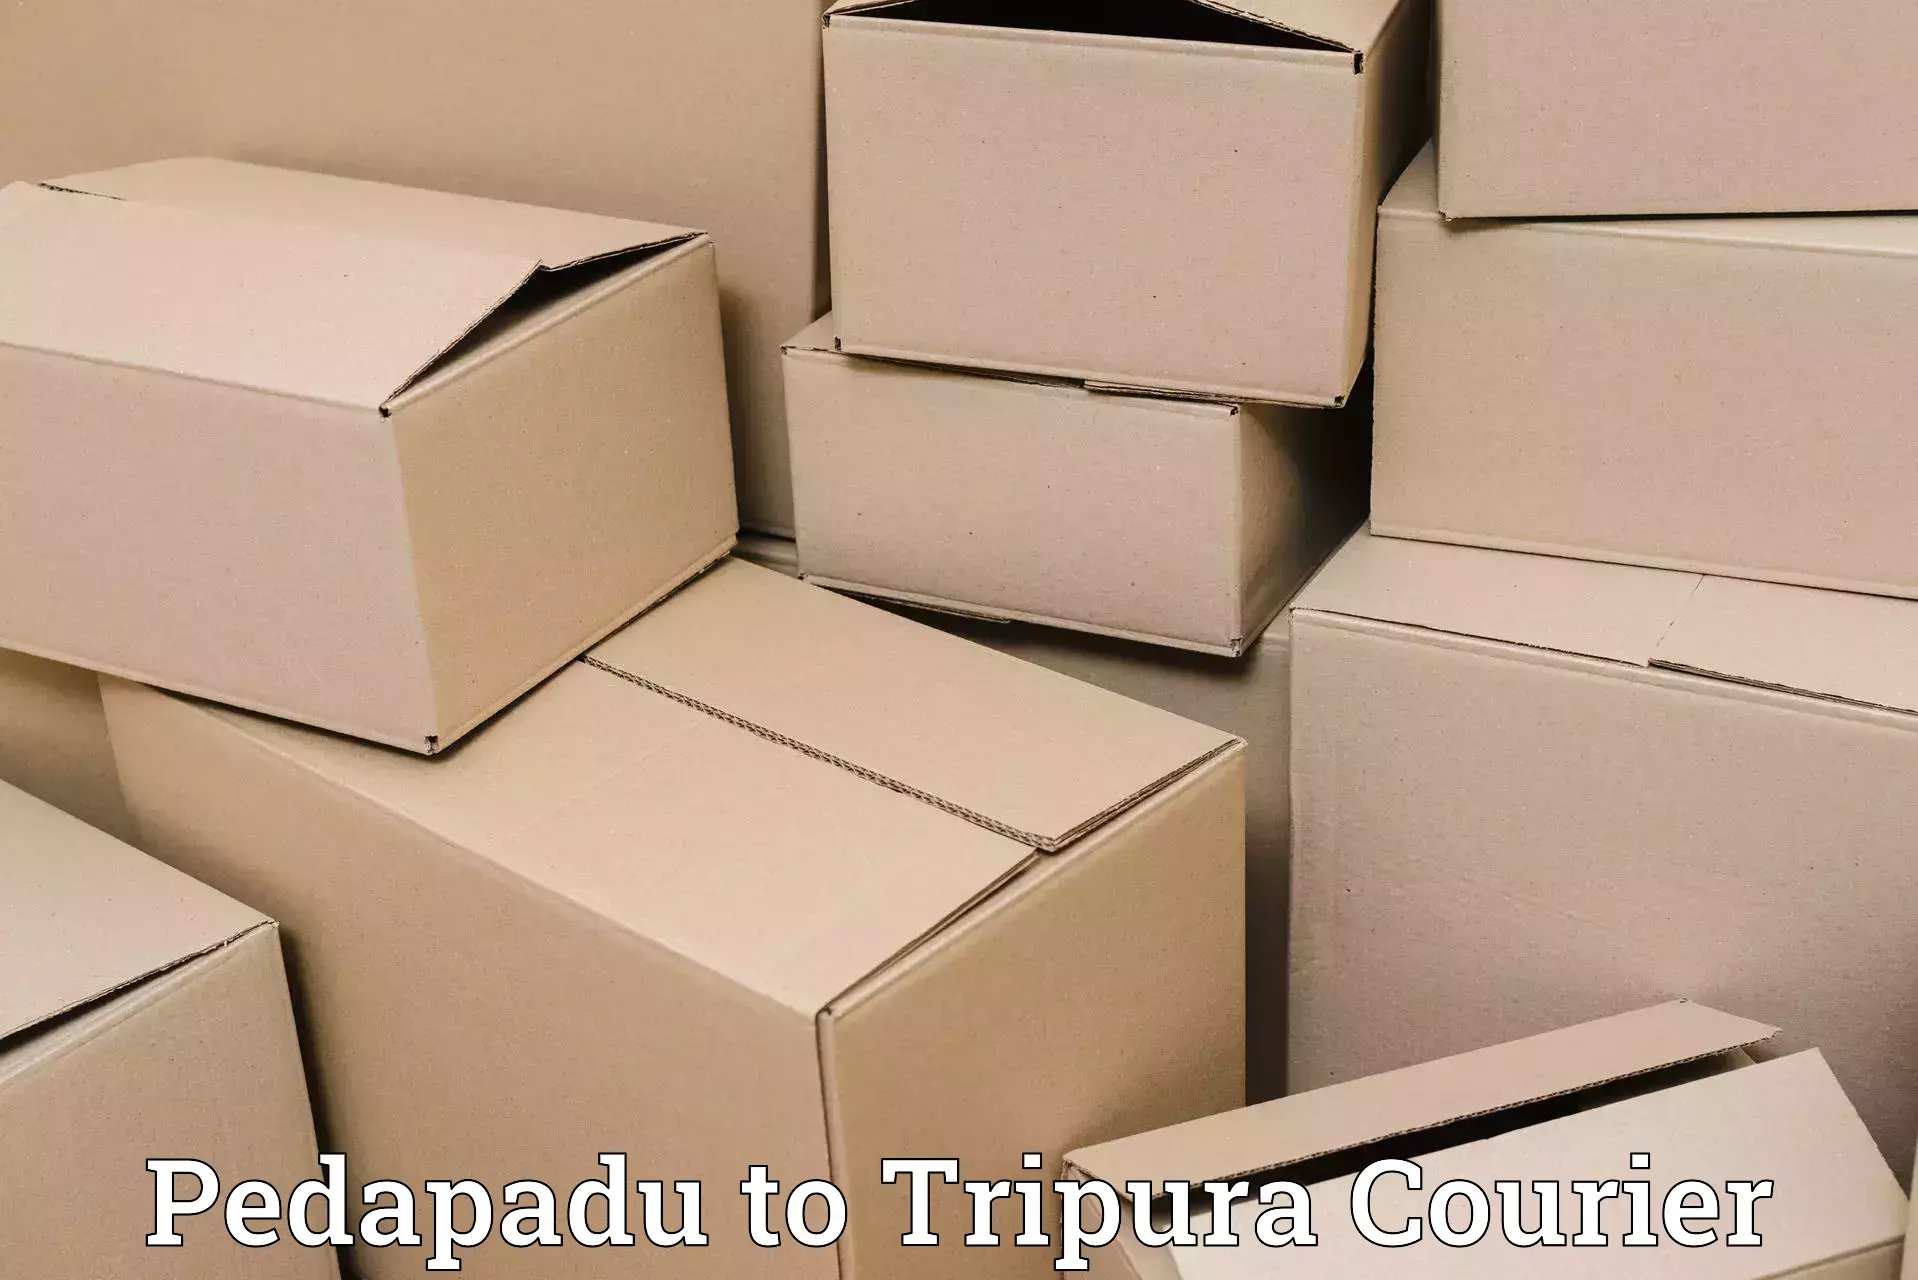 Round-the-clock parcel delivery Pedapadu to Tripura